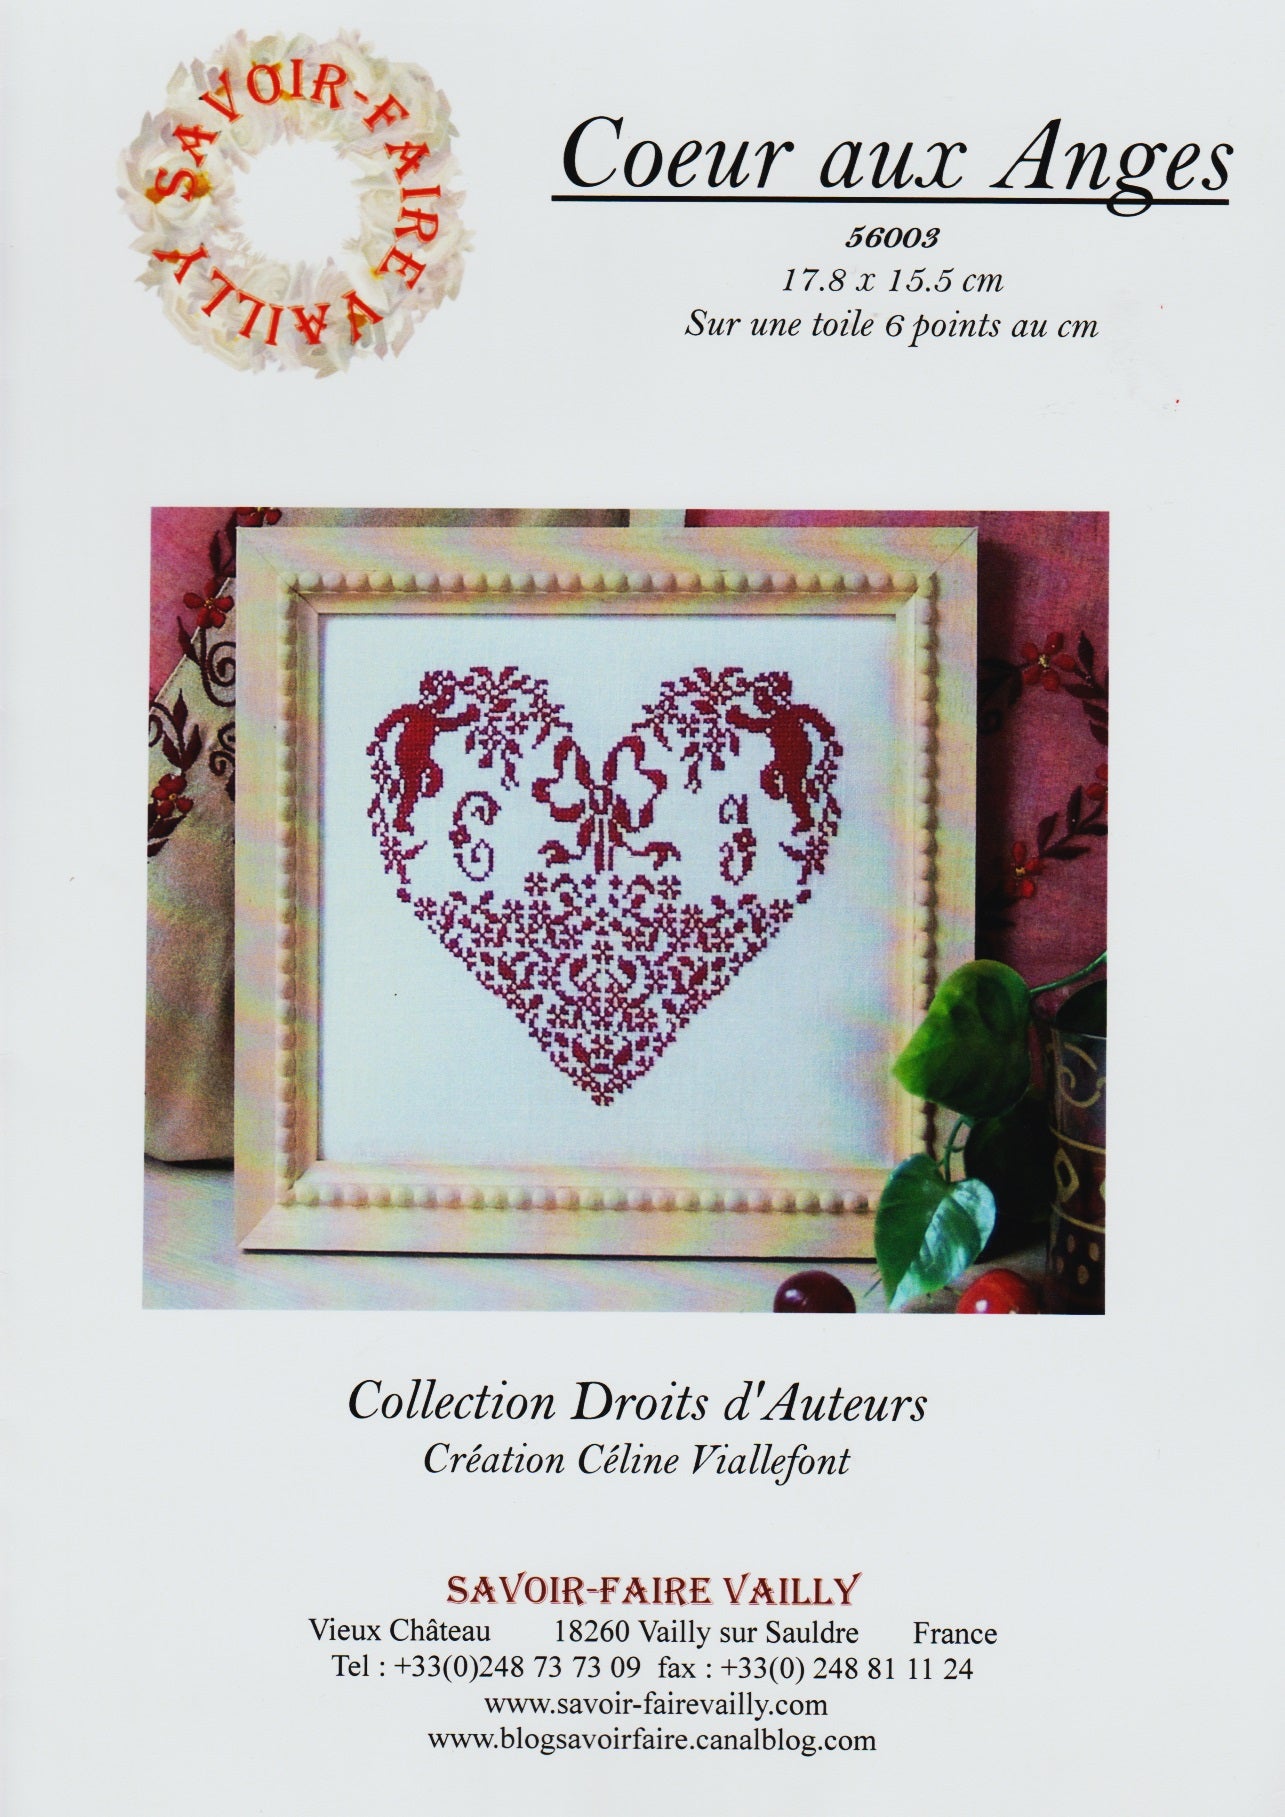 Savoir-Faire Vailly Coeur aux Anges cross stitch pattern